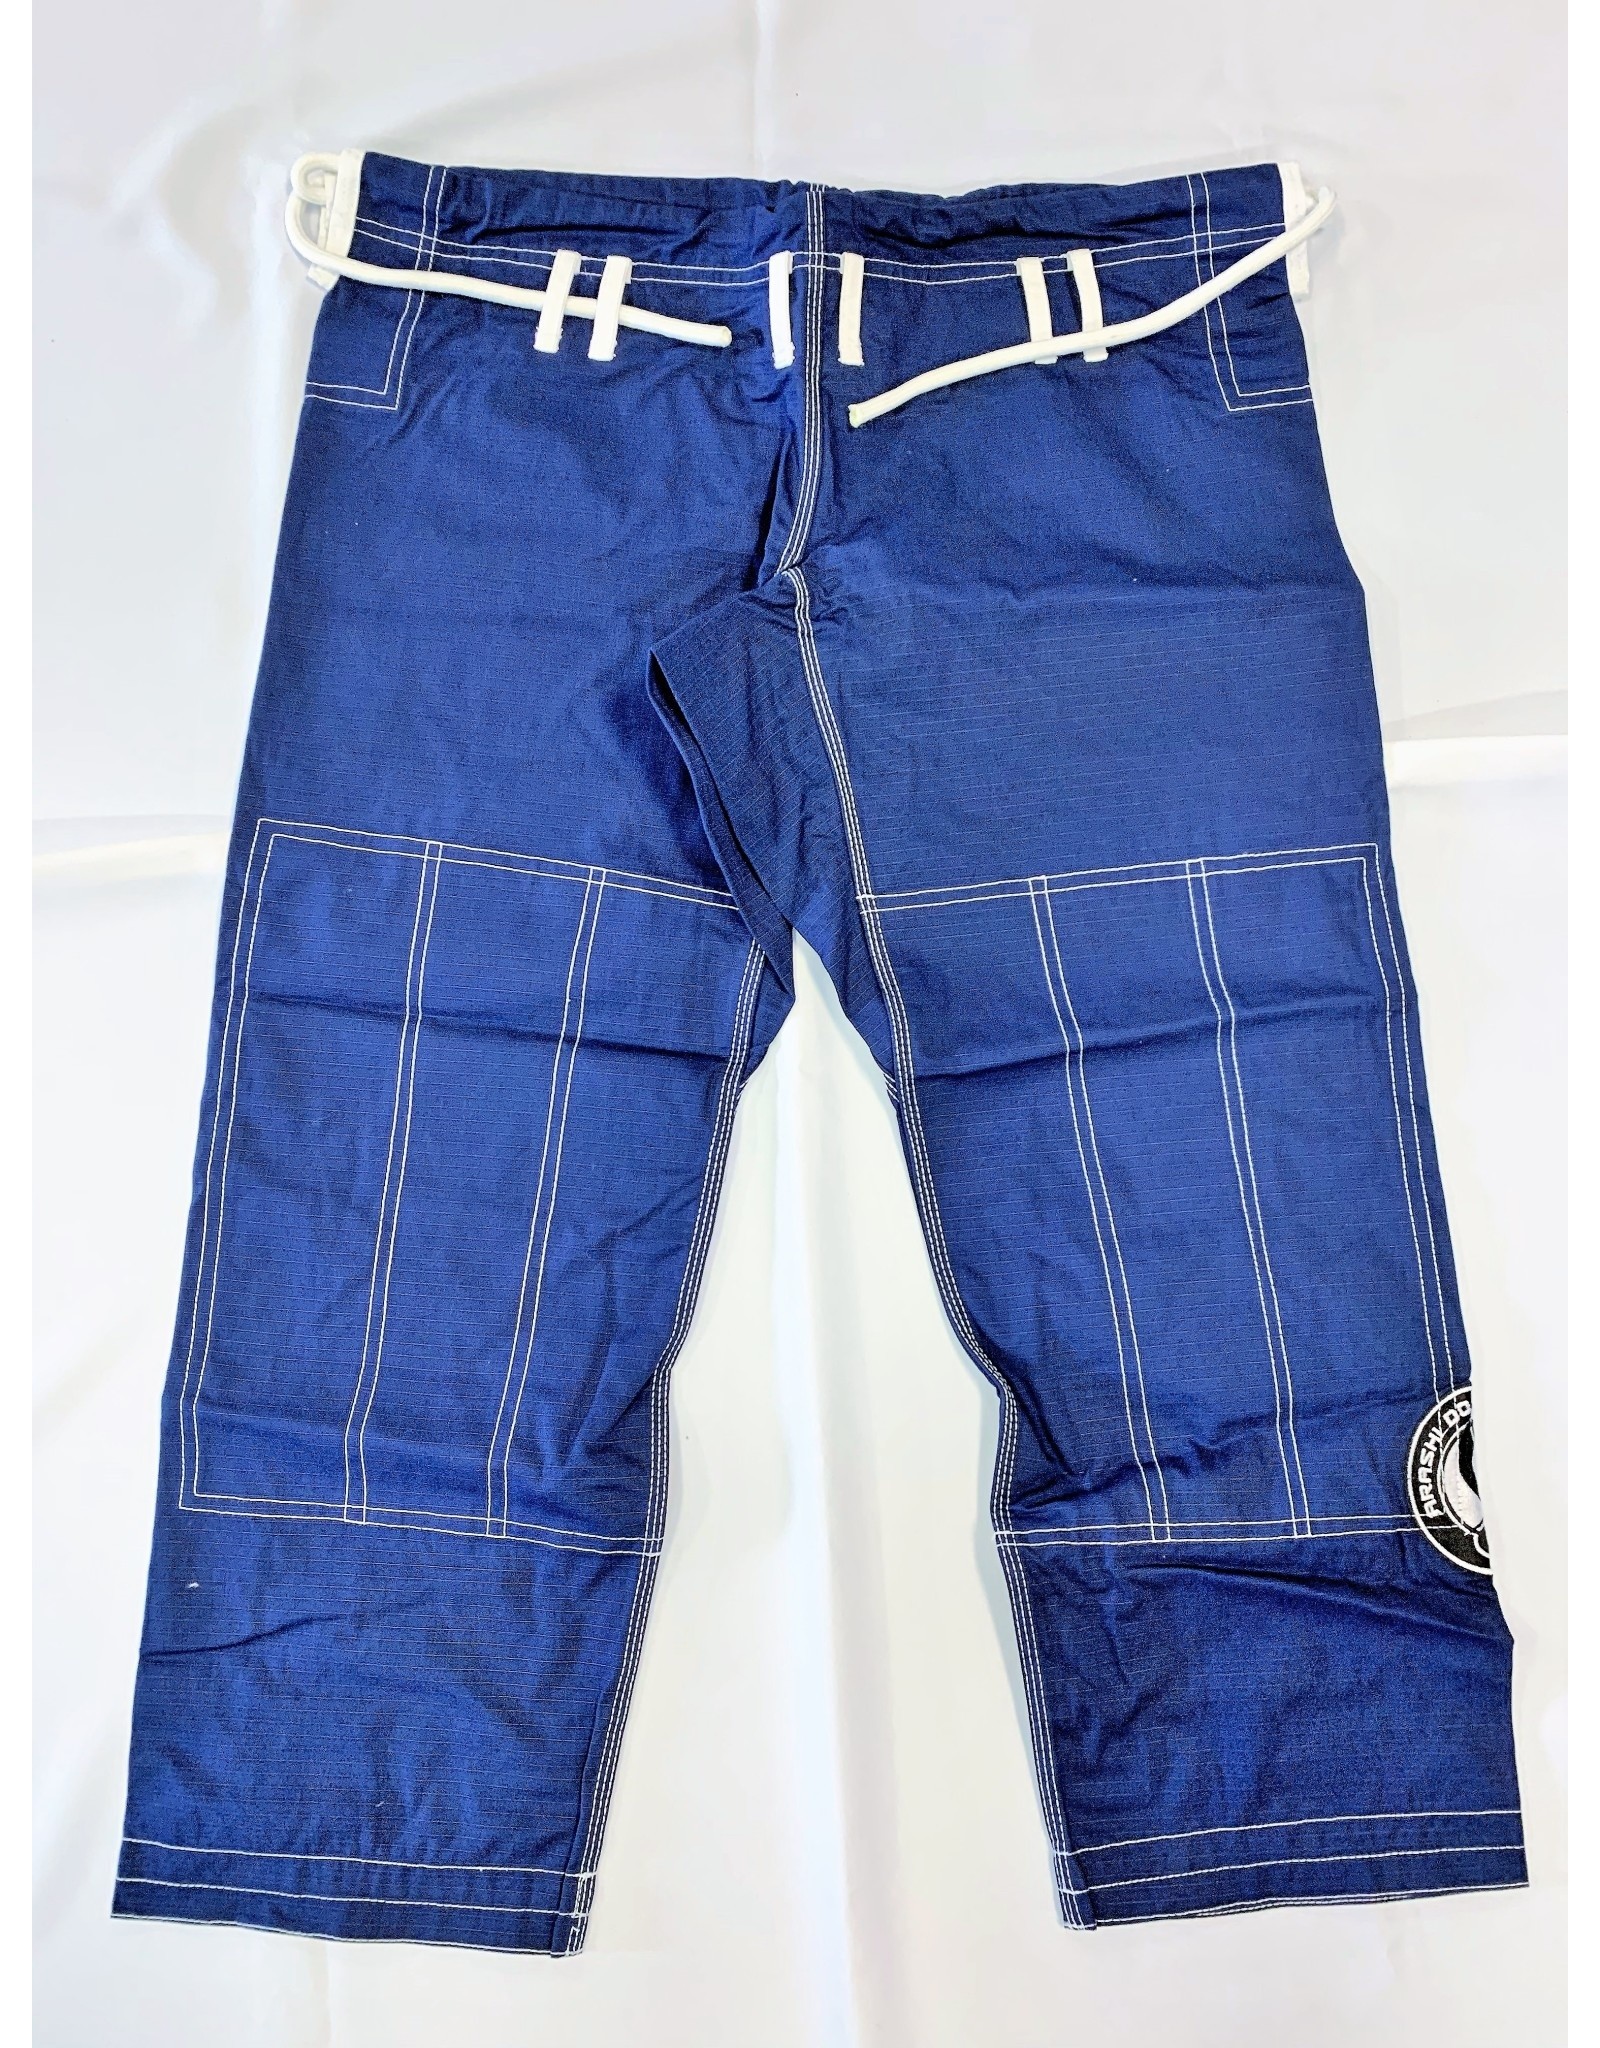 Arashi-Do Behring BJJ Gi's Adult Pants Coloured